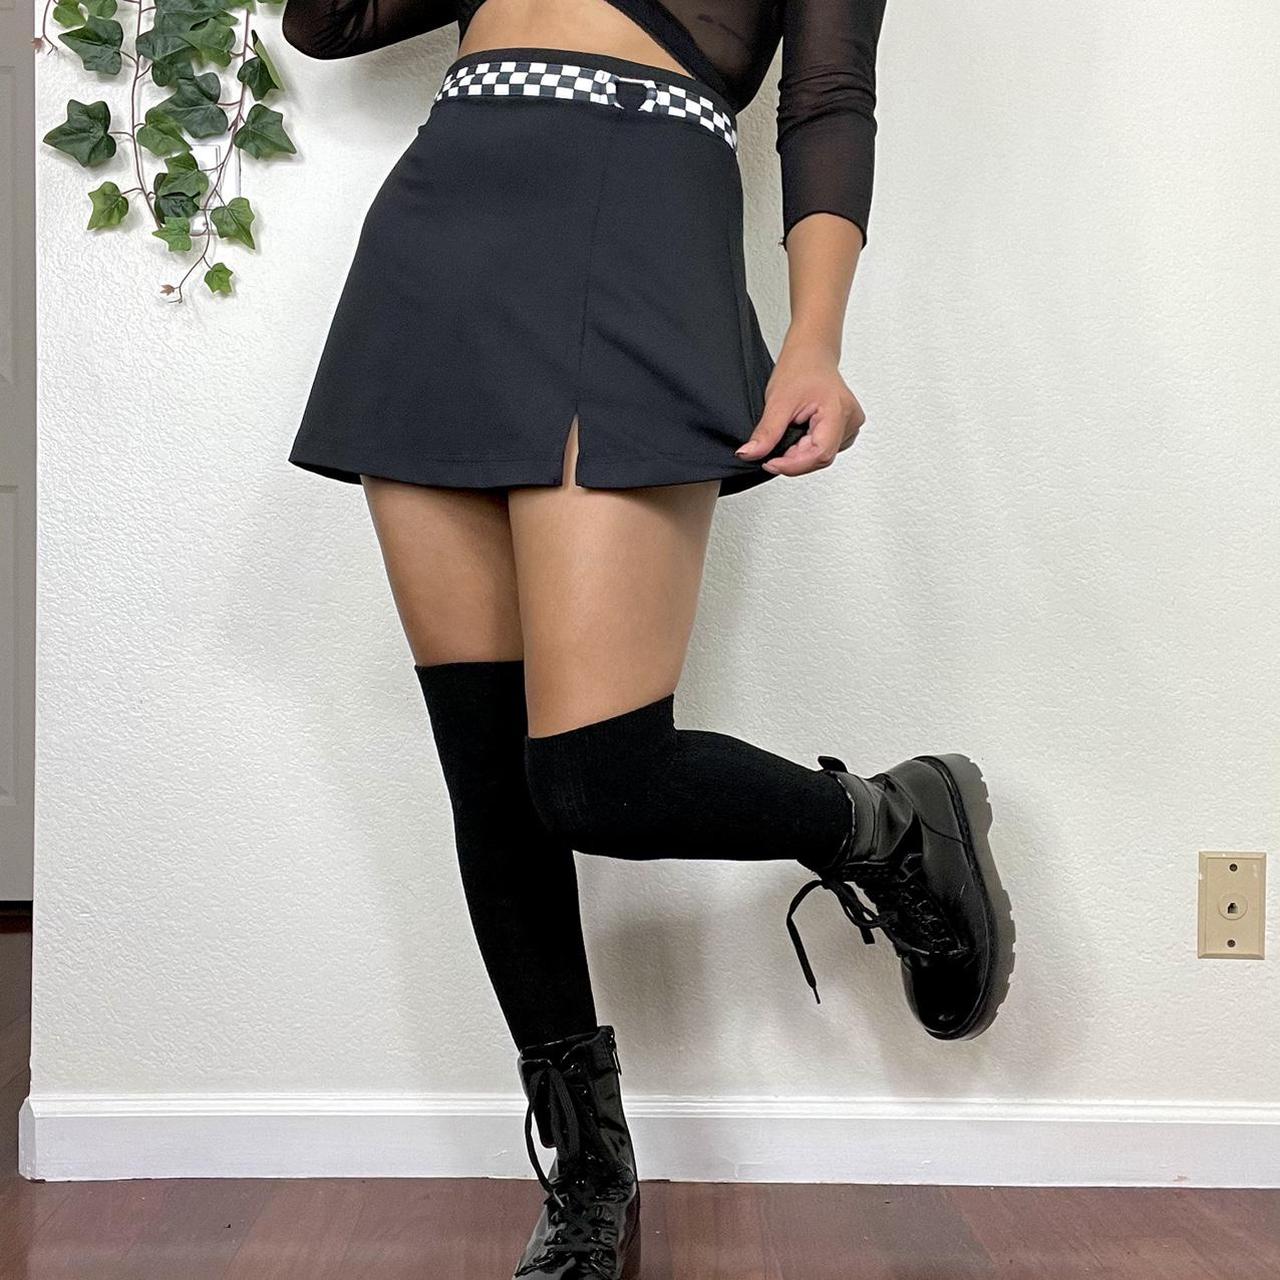 Product Image 1 - 90s ultra mini skirt 🎱

Beautiful